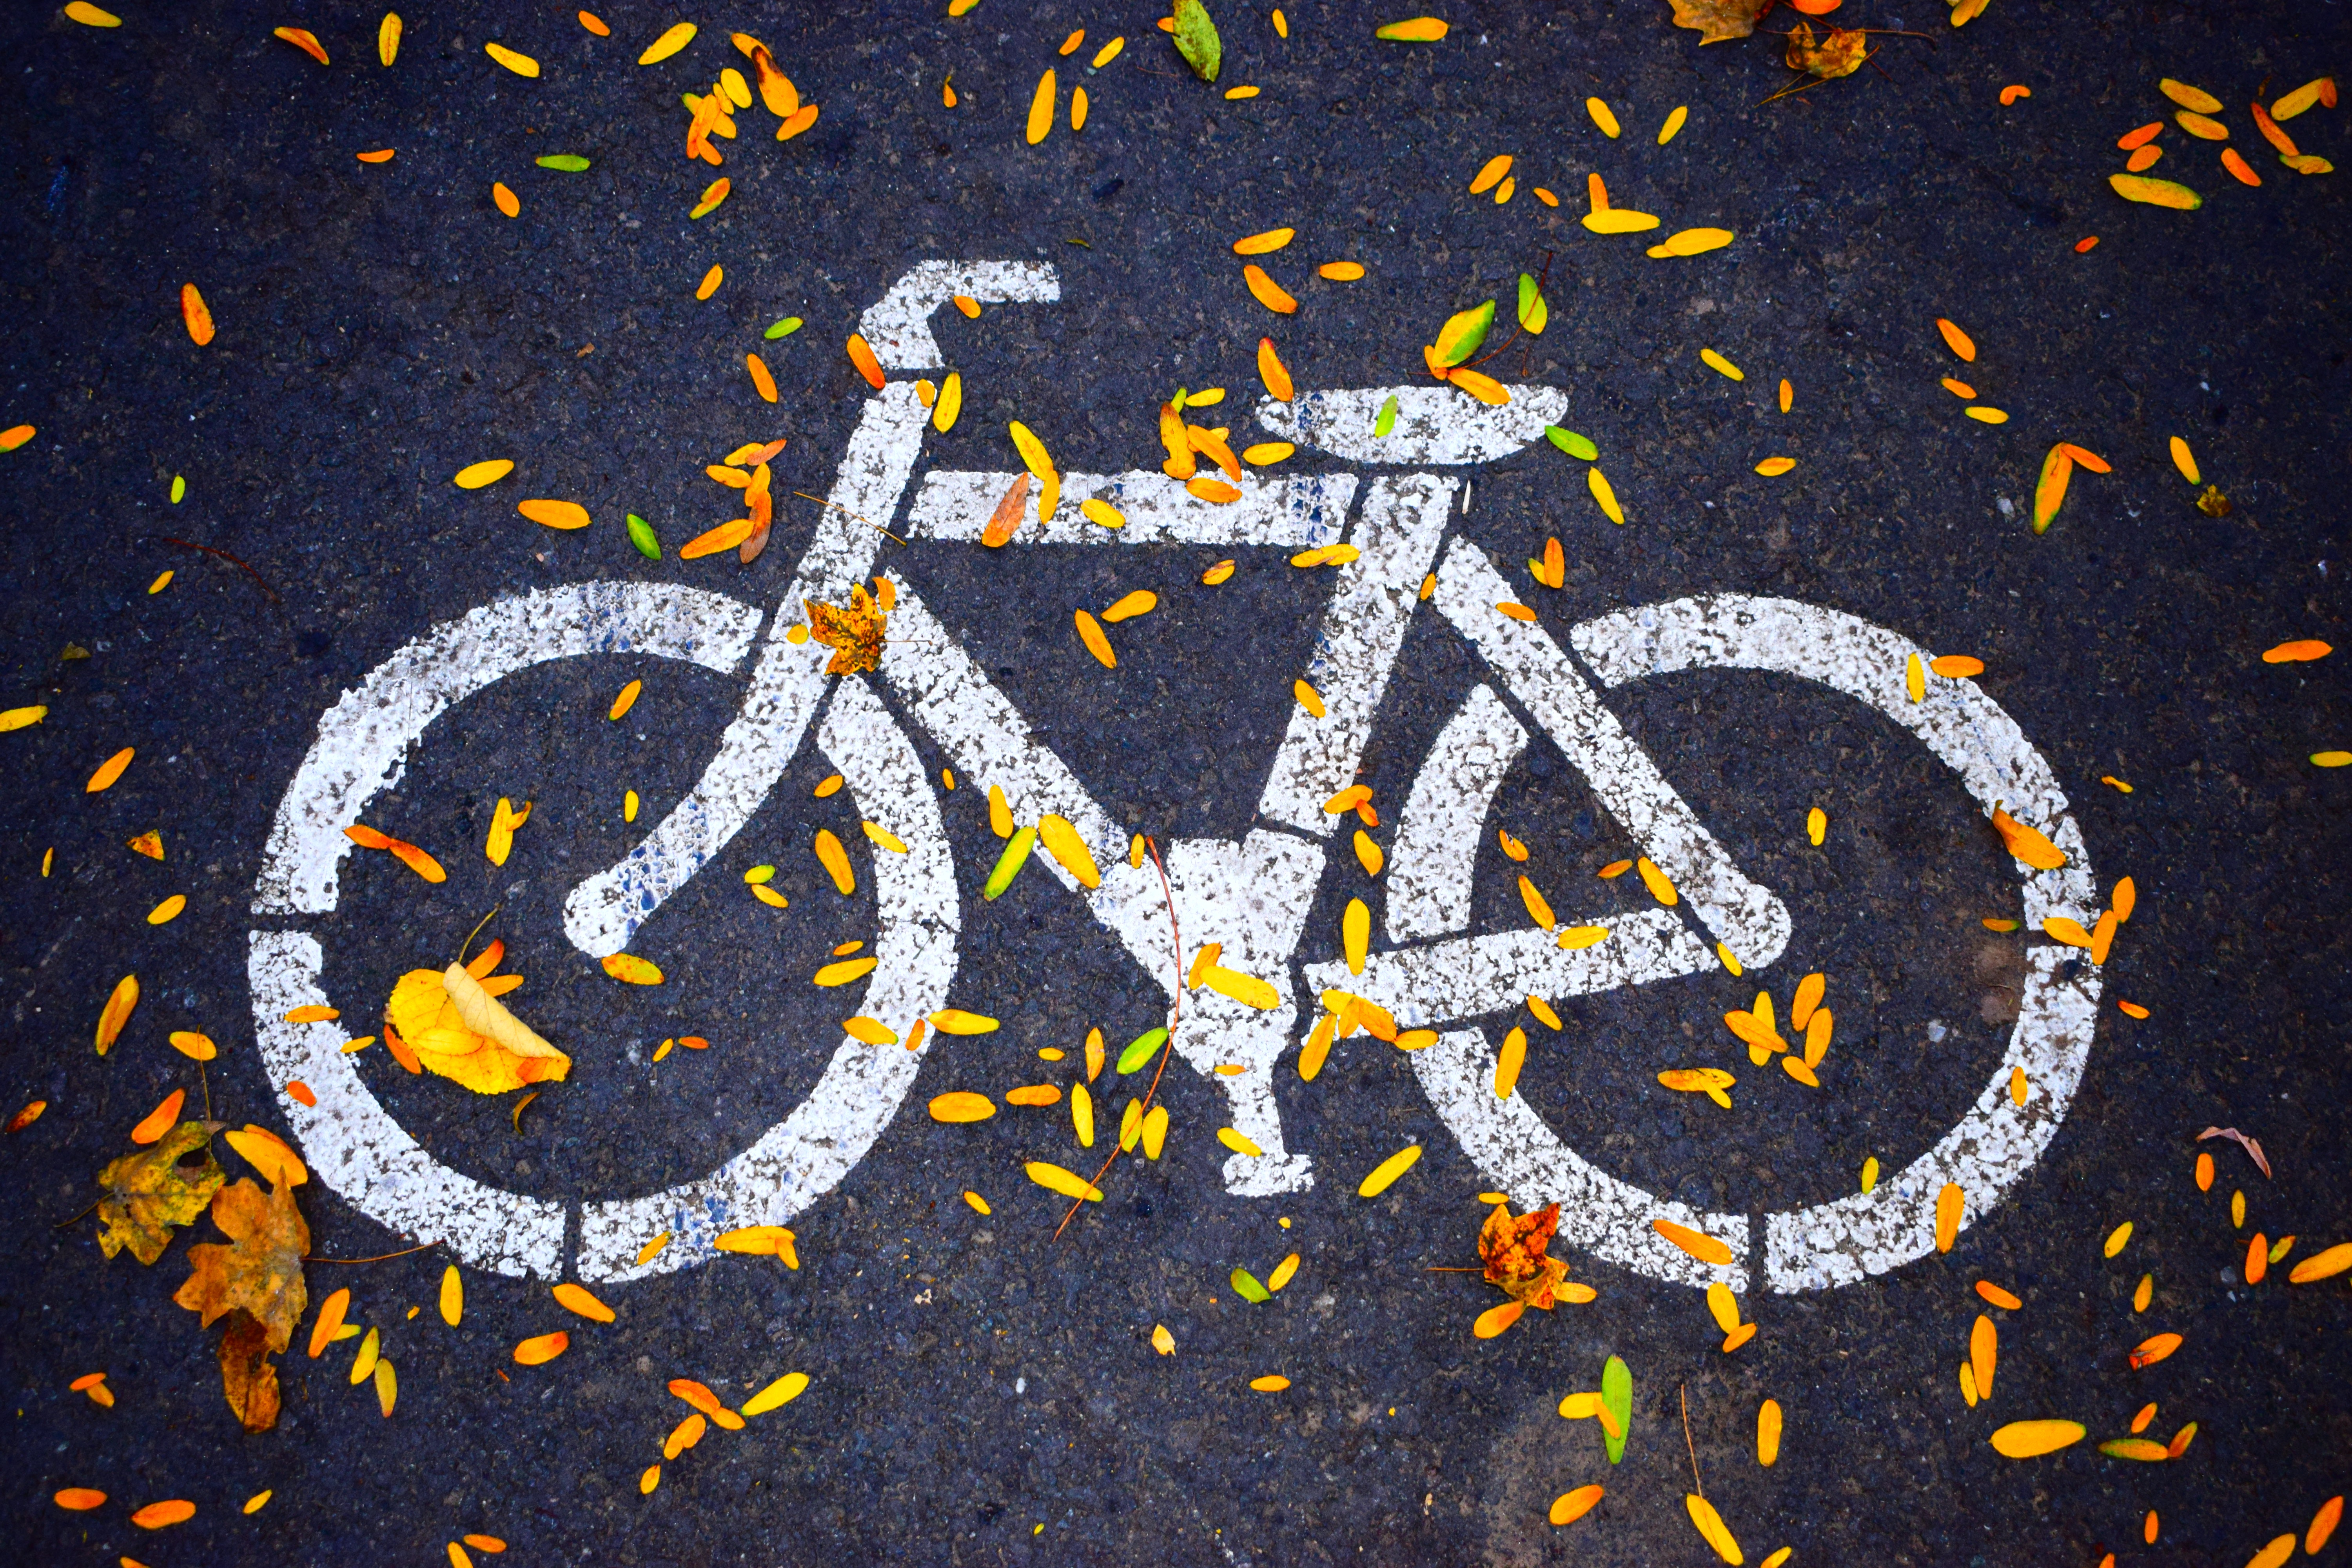 Bicycle marking on roadway